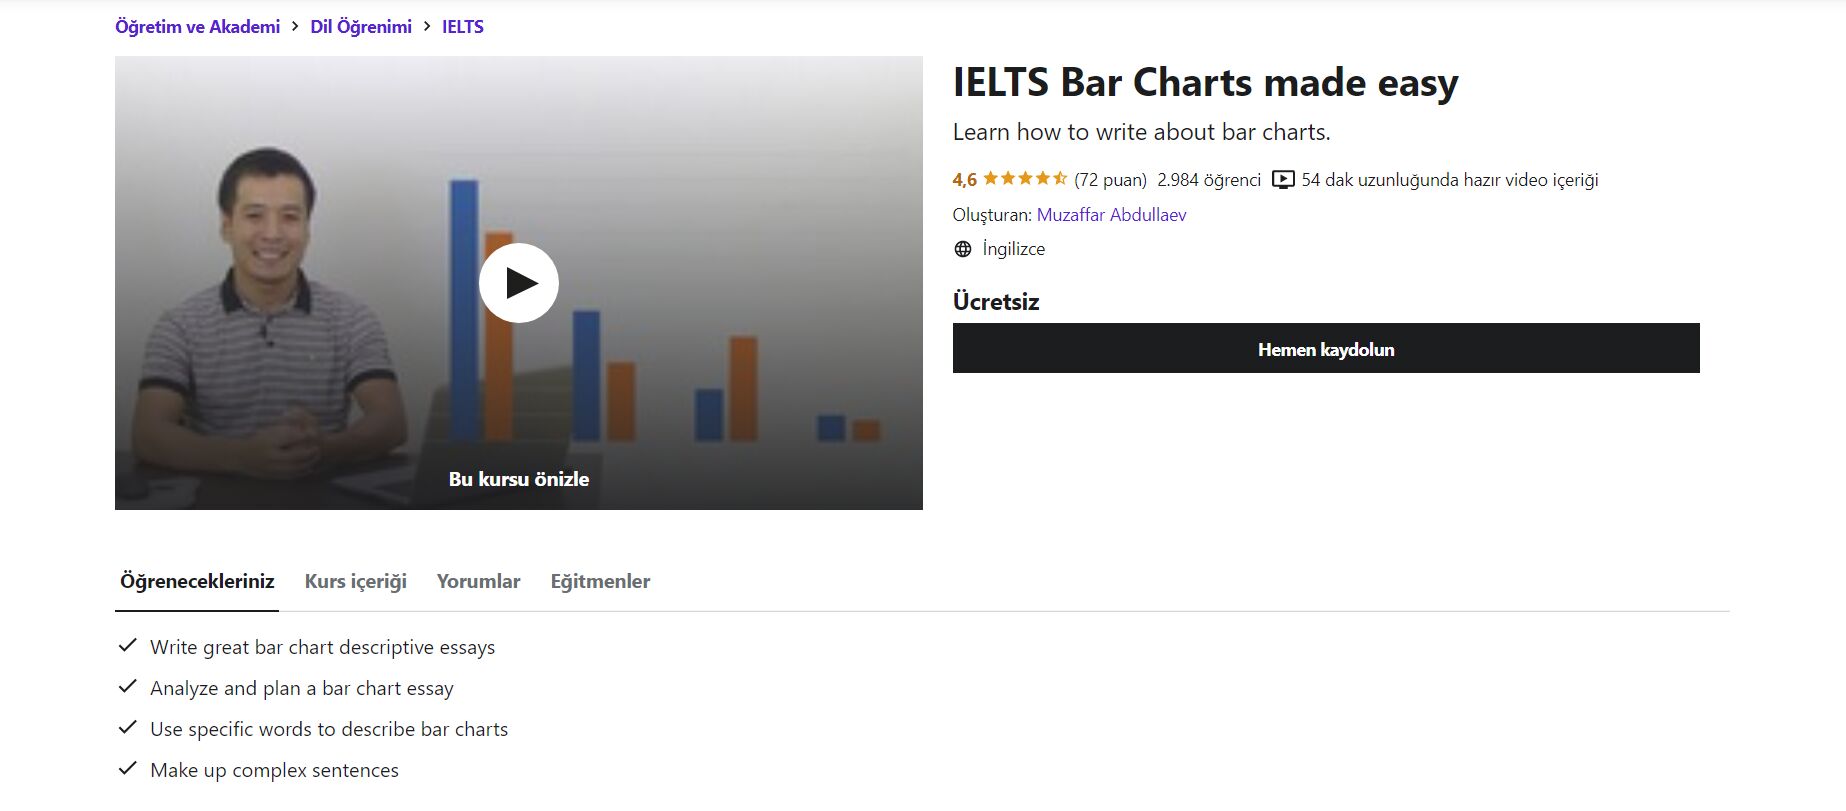 IELTS Bar Charts Made Easy